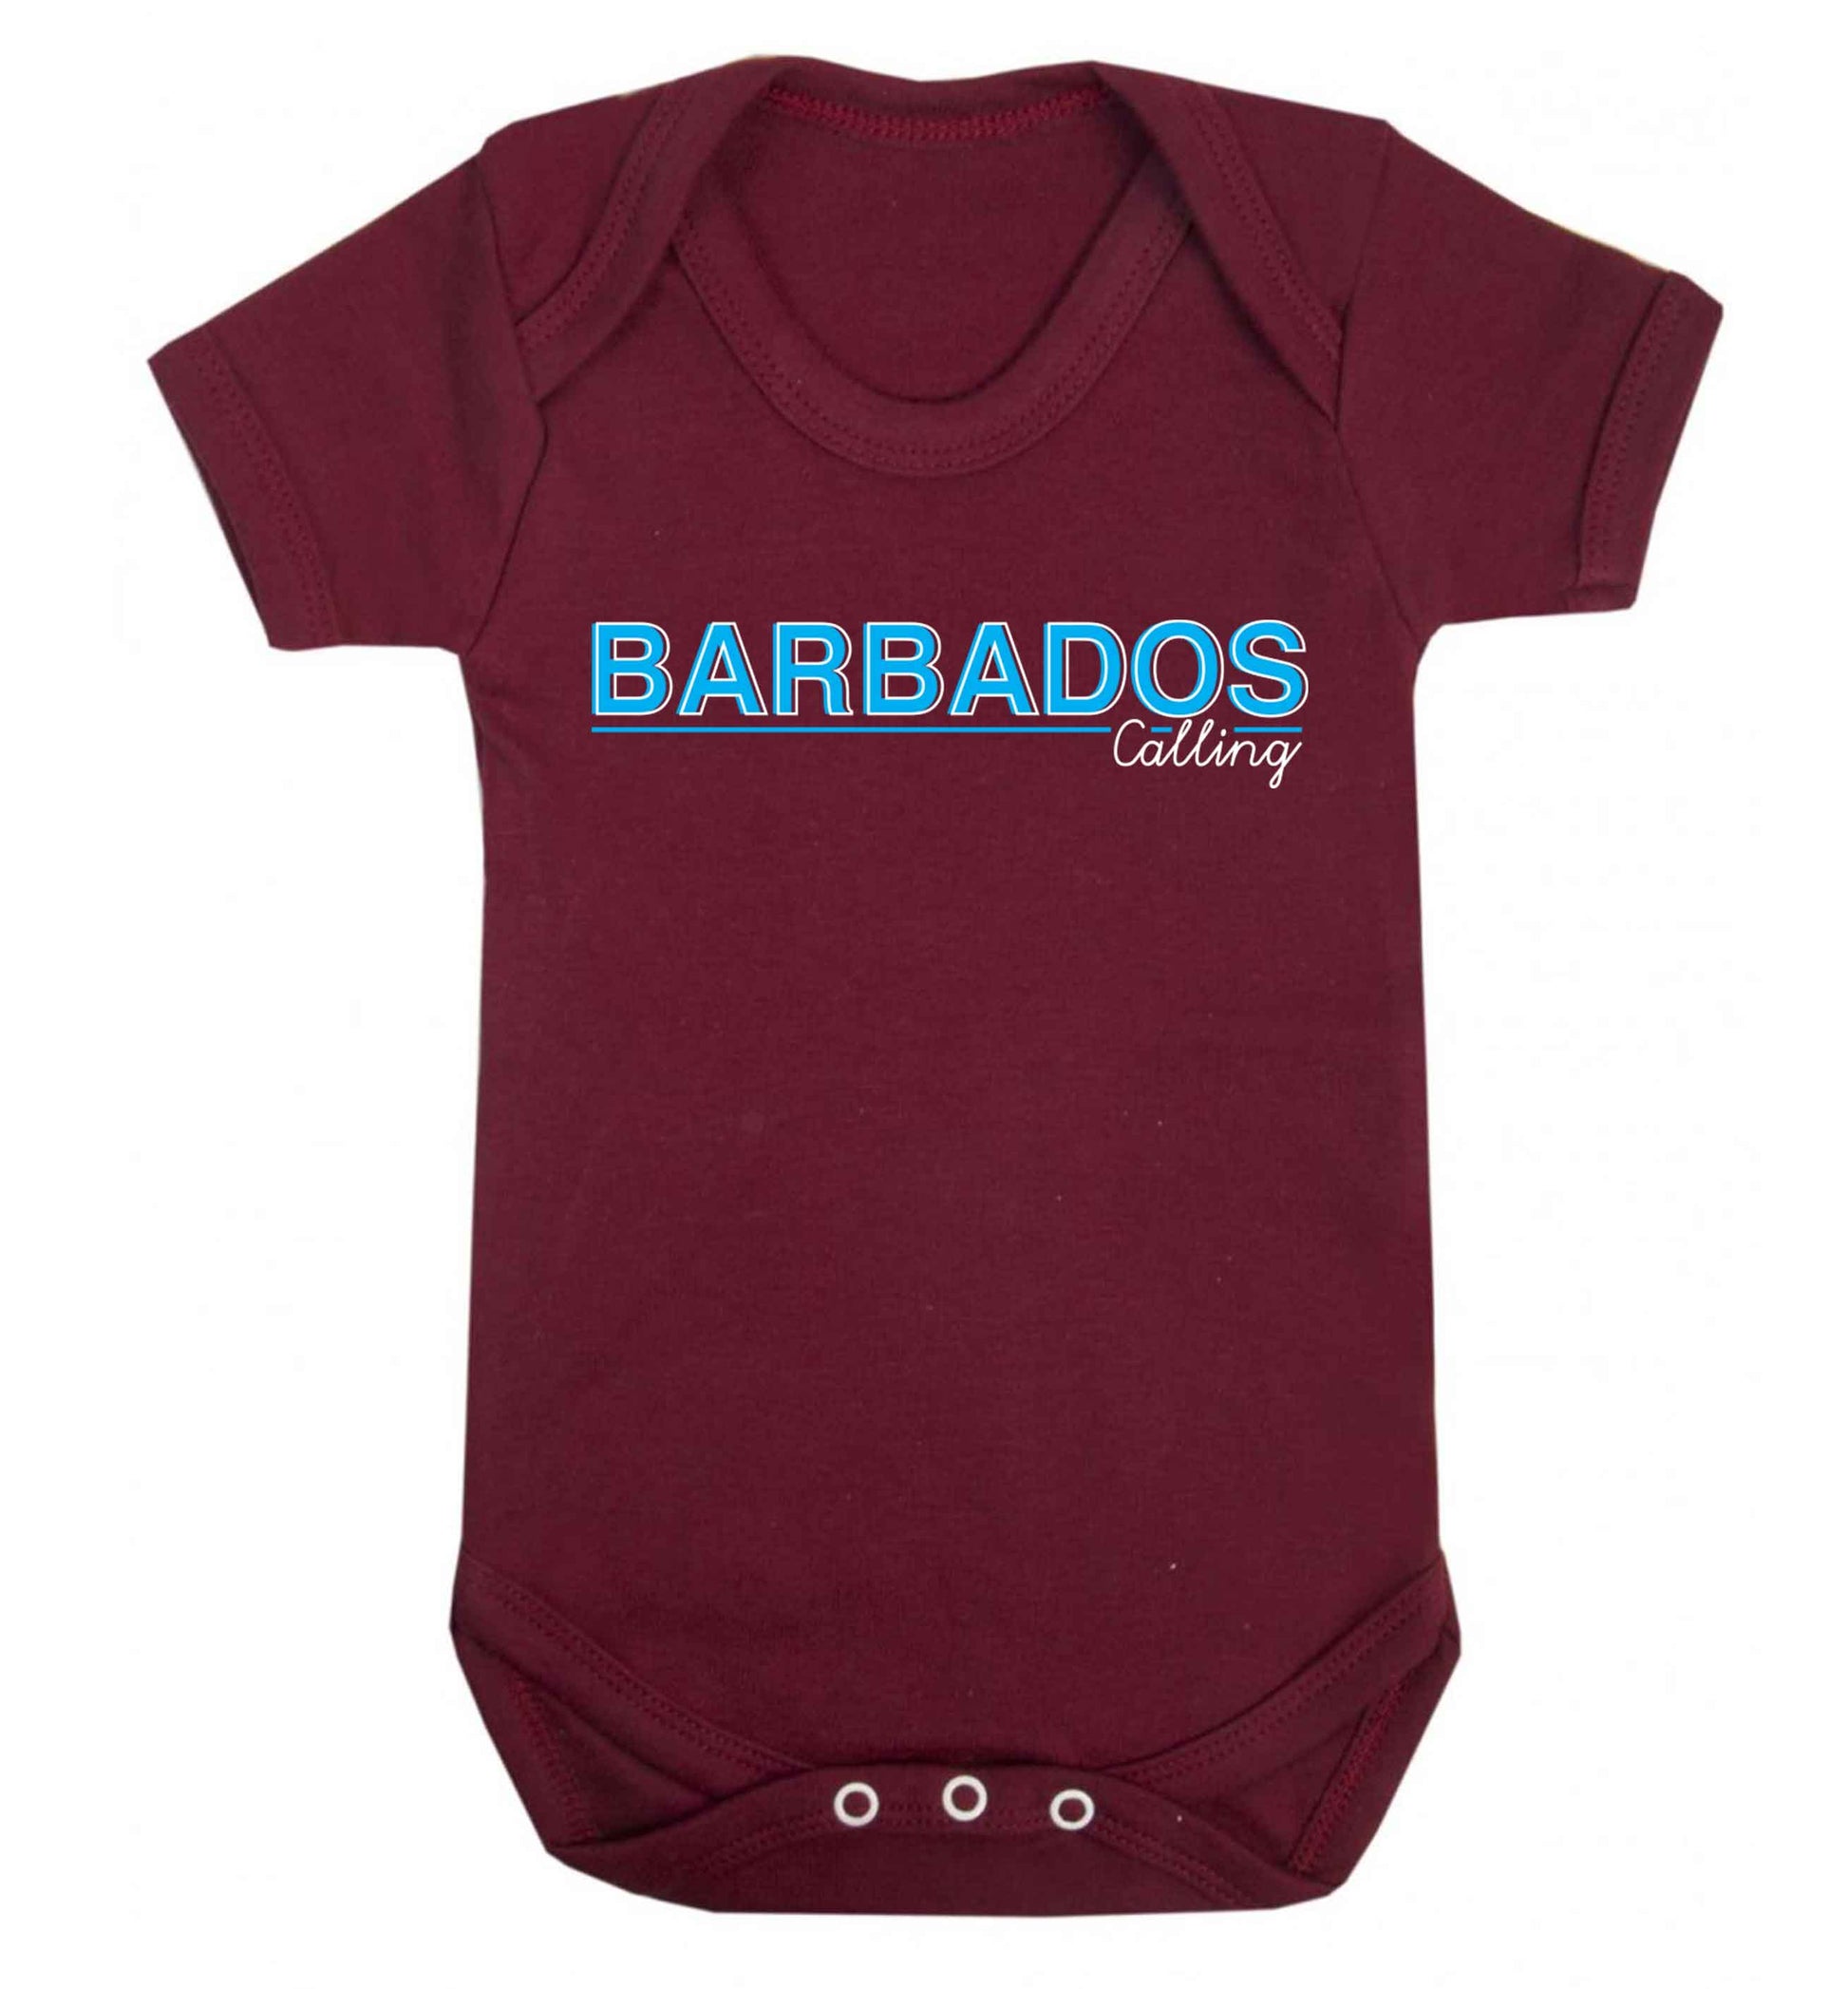 Barbados calling Baby Vest maroon 18-24 months